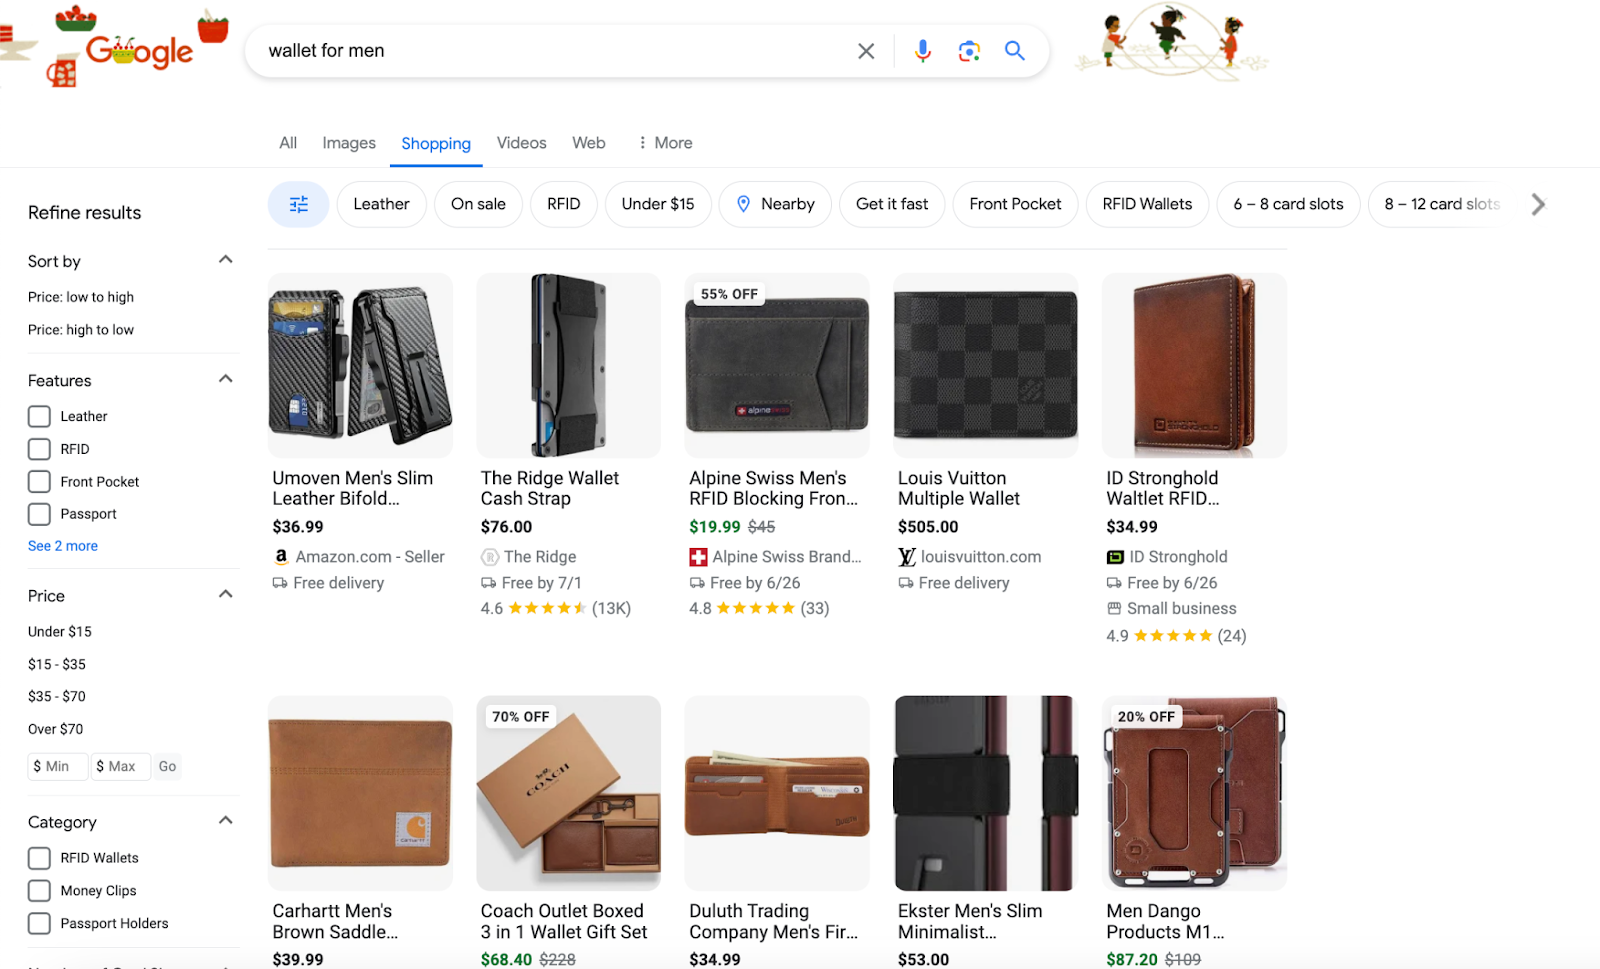 Google Shopping 